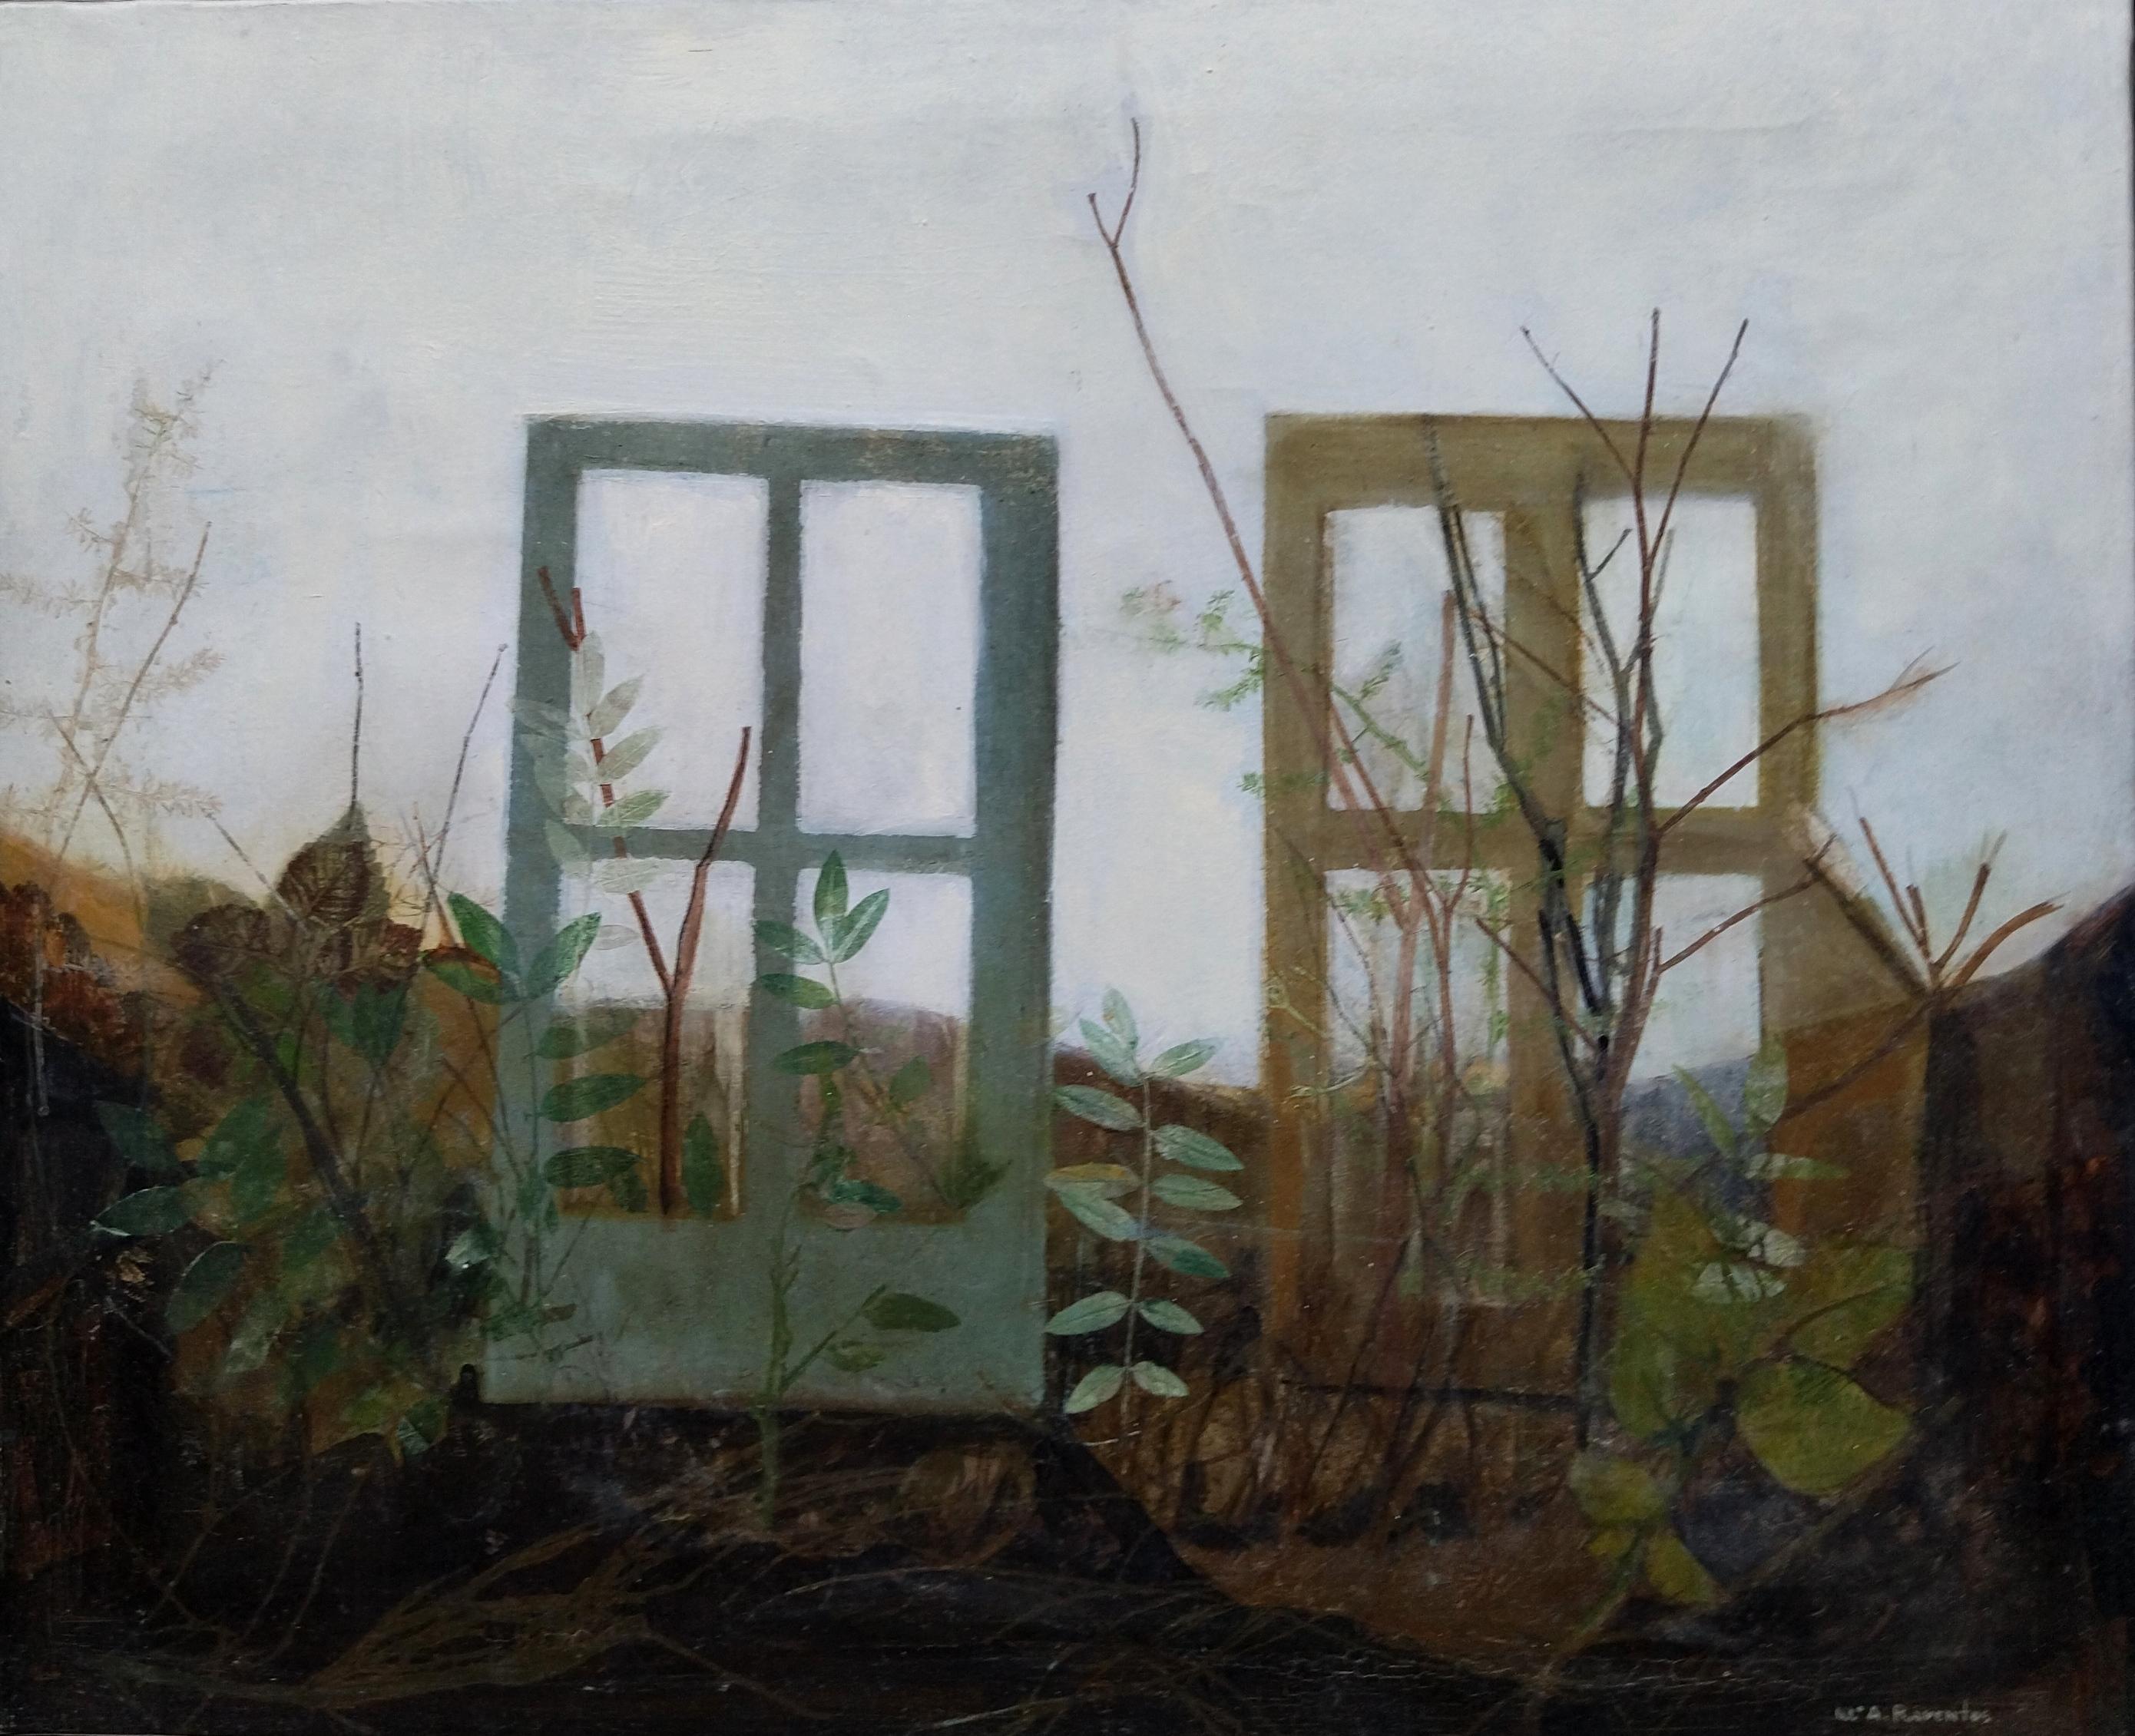 RAVENTOS 3.2 Winds Windows   Garden  Green original abstract mixed media - Expressionist Painting by Maria Asuncion Raventos